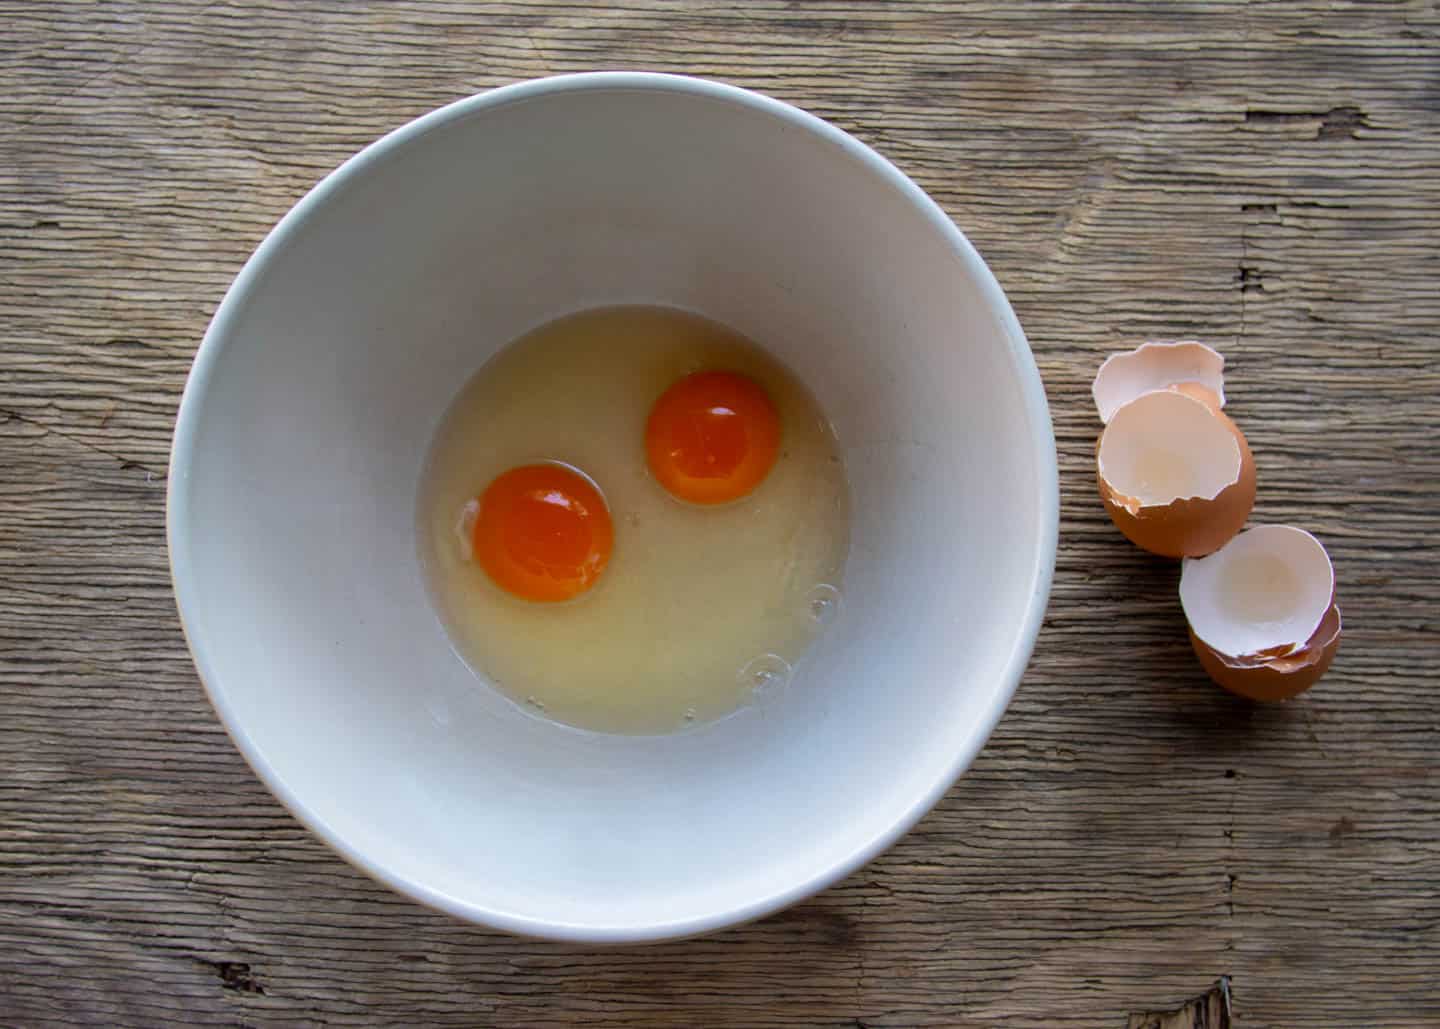 2 cracked eggs in white bowl